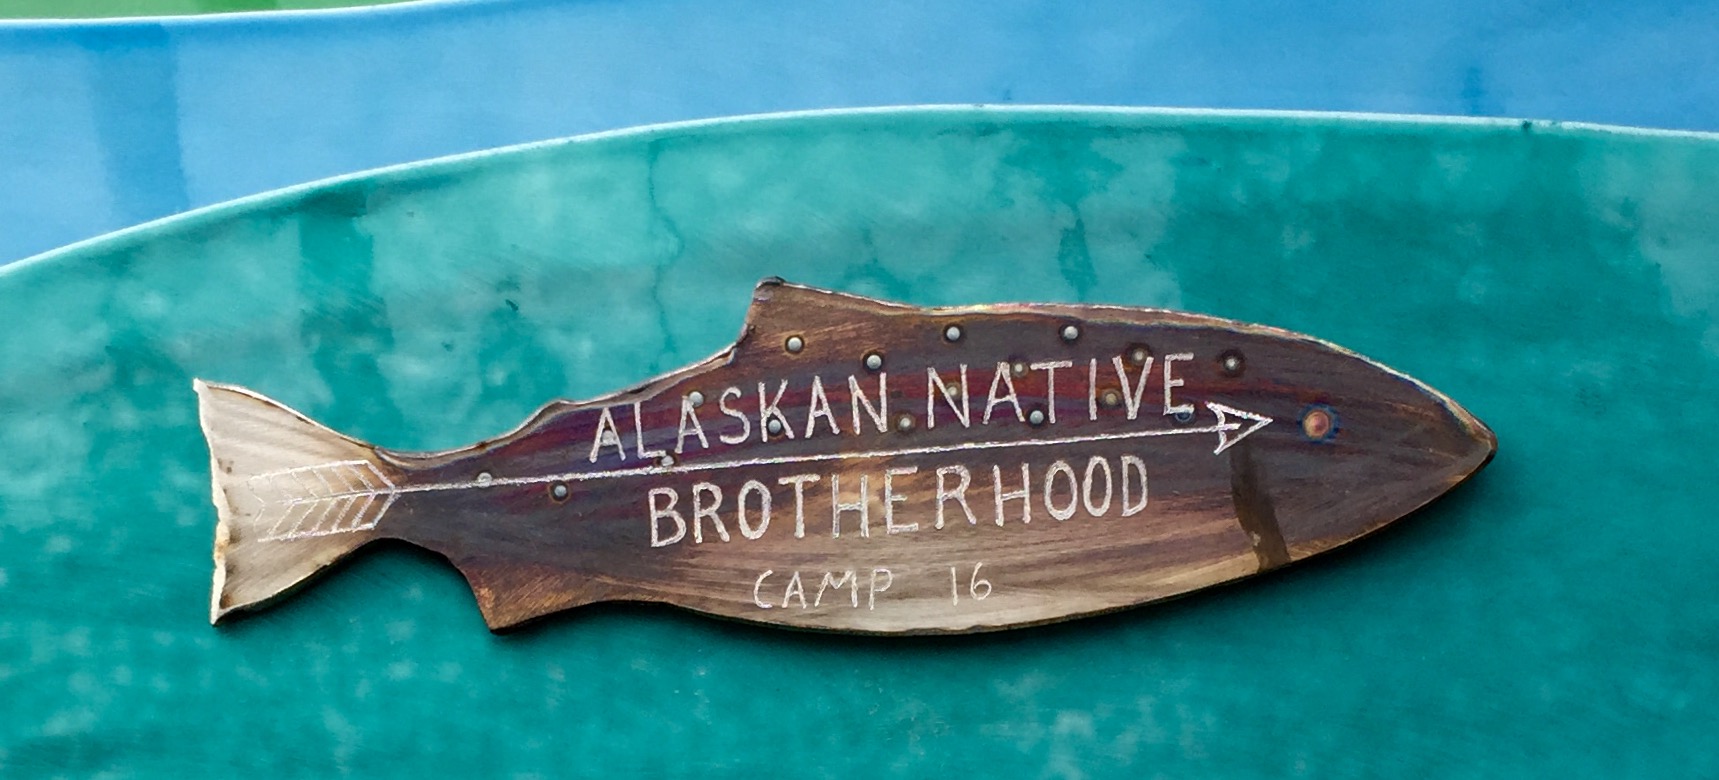 Alaska Native Brotherhood.jpg